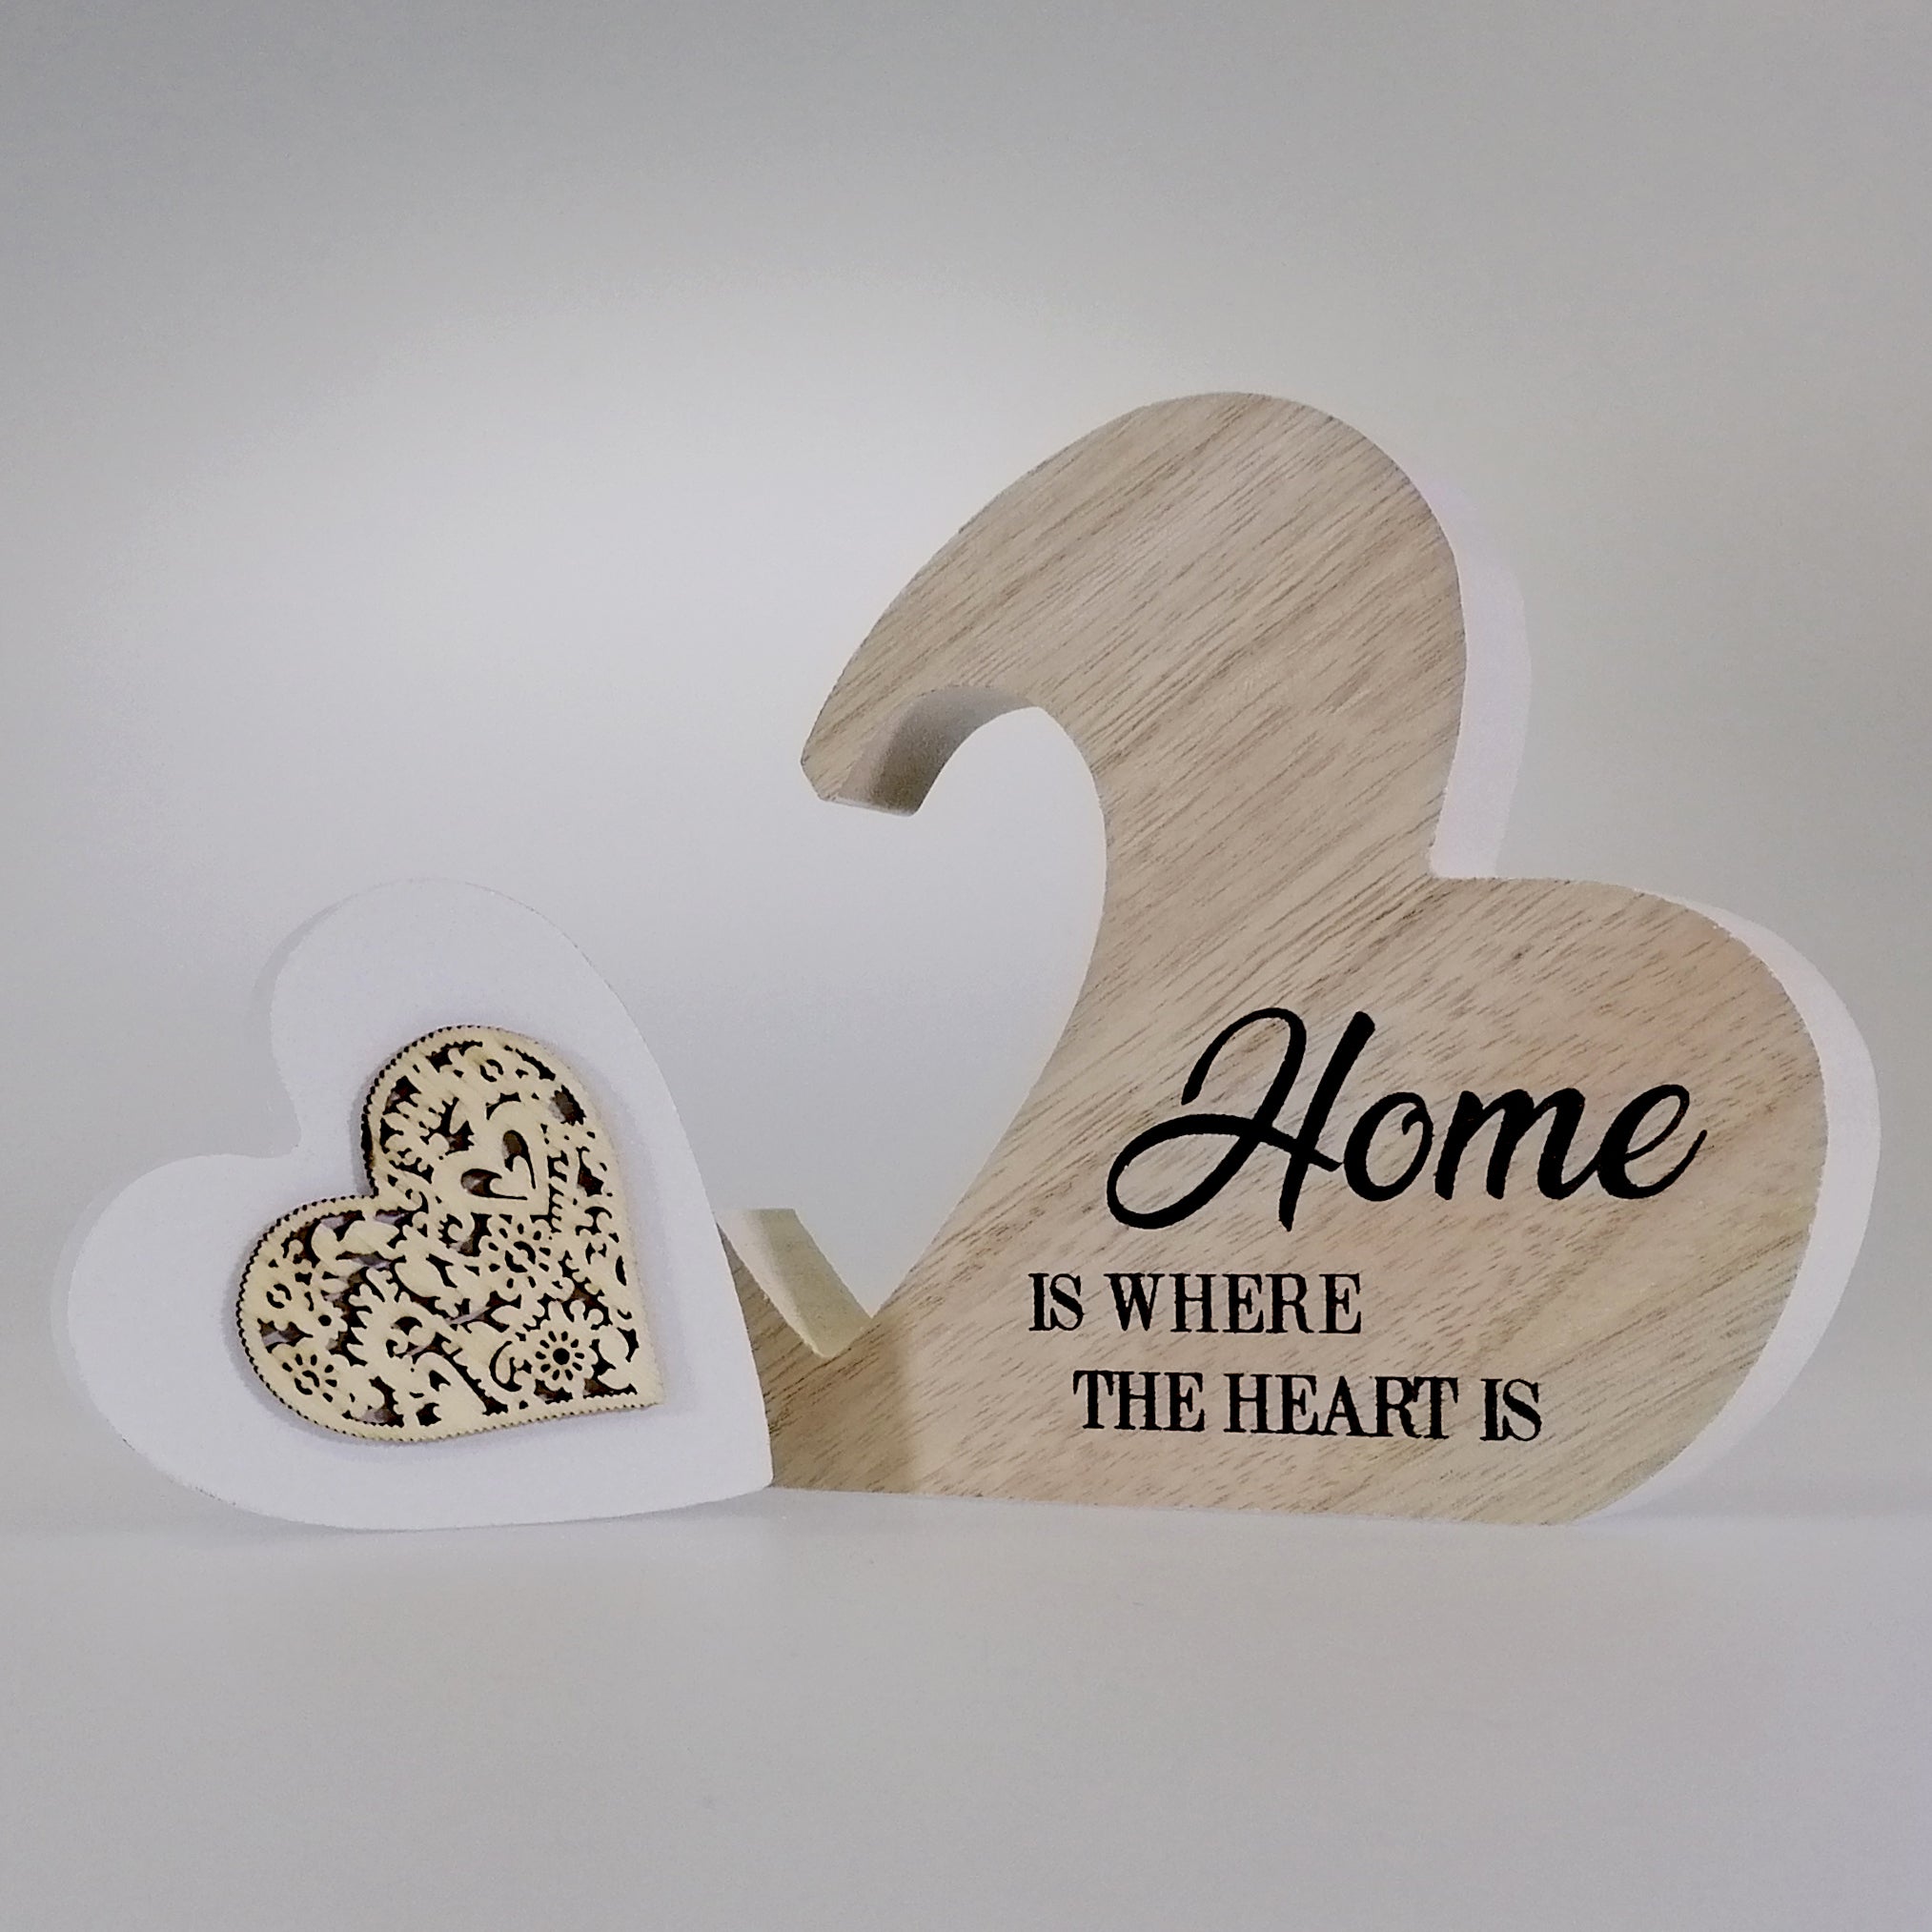 Home' Heart Plaque - Small - 2 Piece